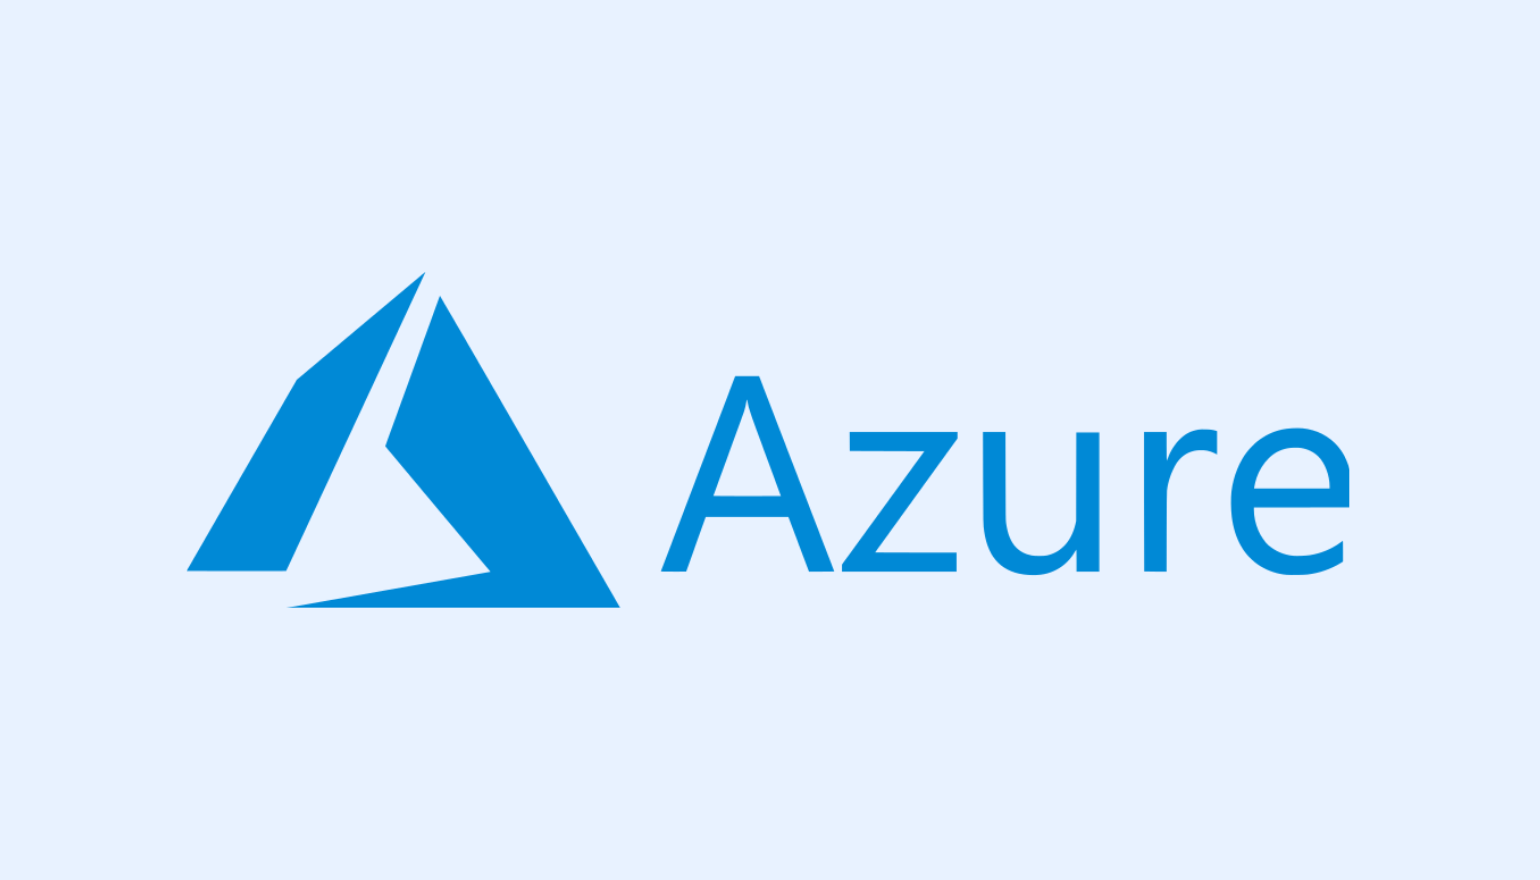 Azure Integration